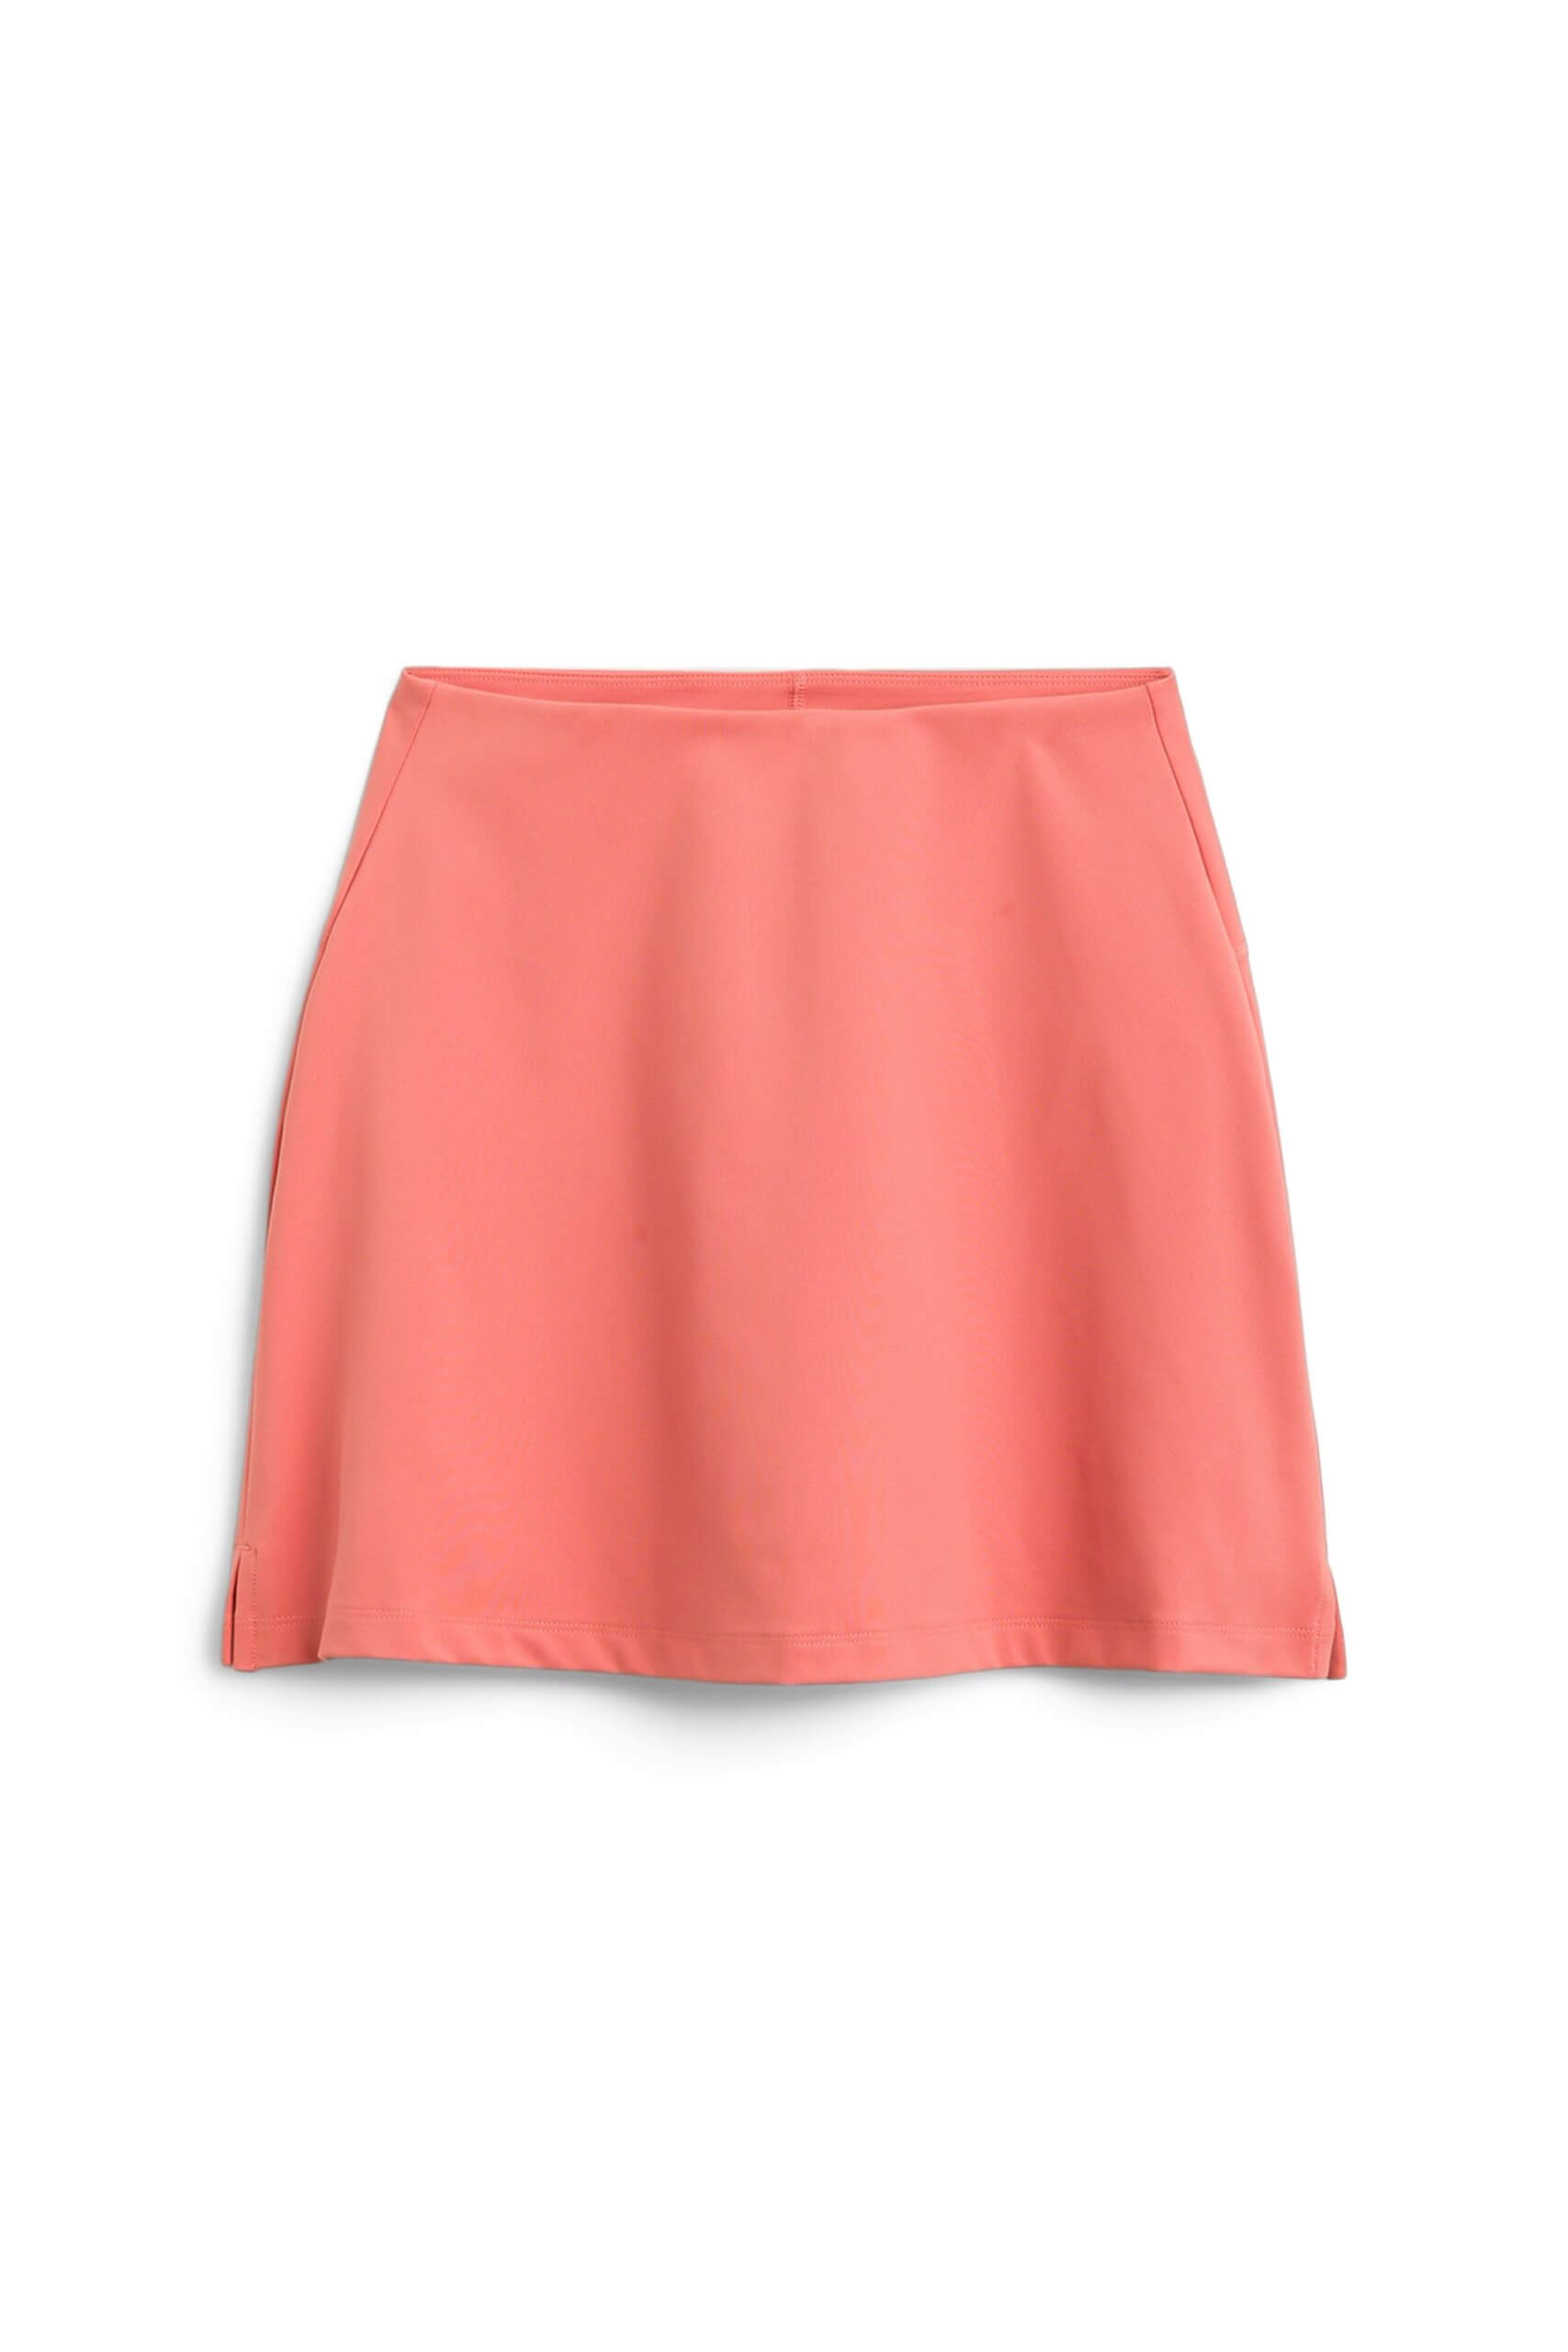 What to Wear Under Your Tennis Skirt or Dress – Edara Apparel